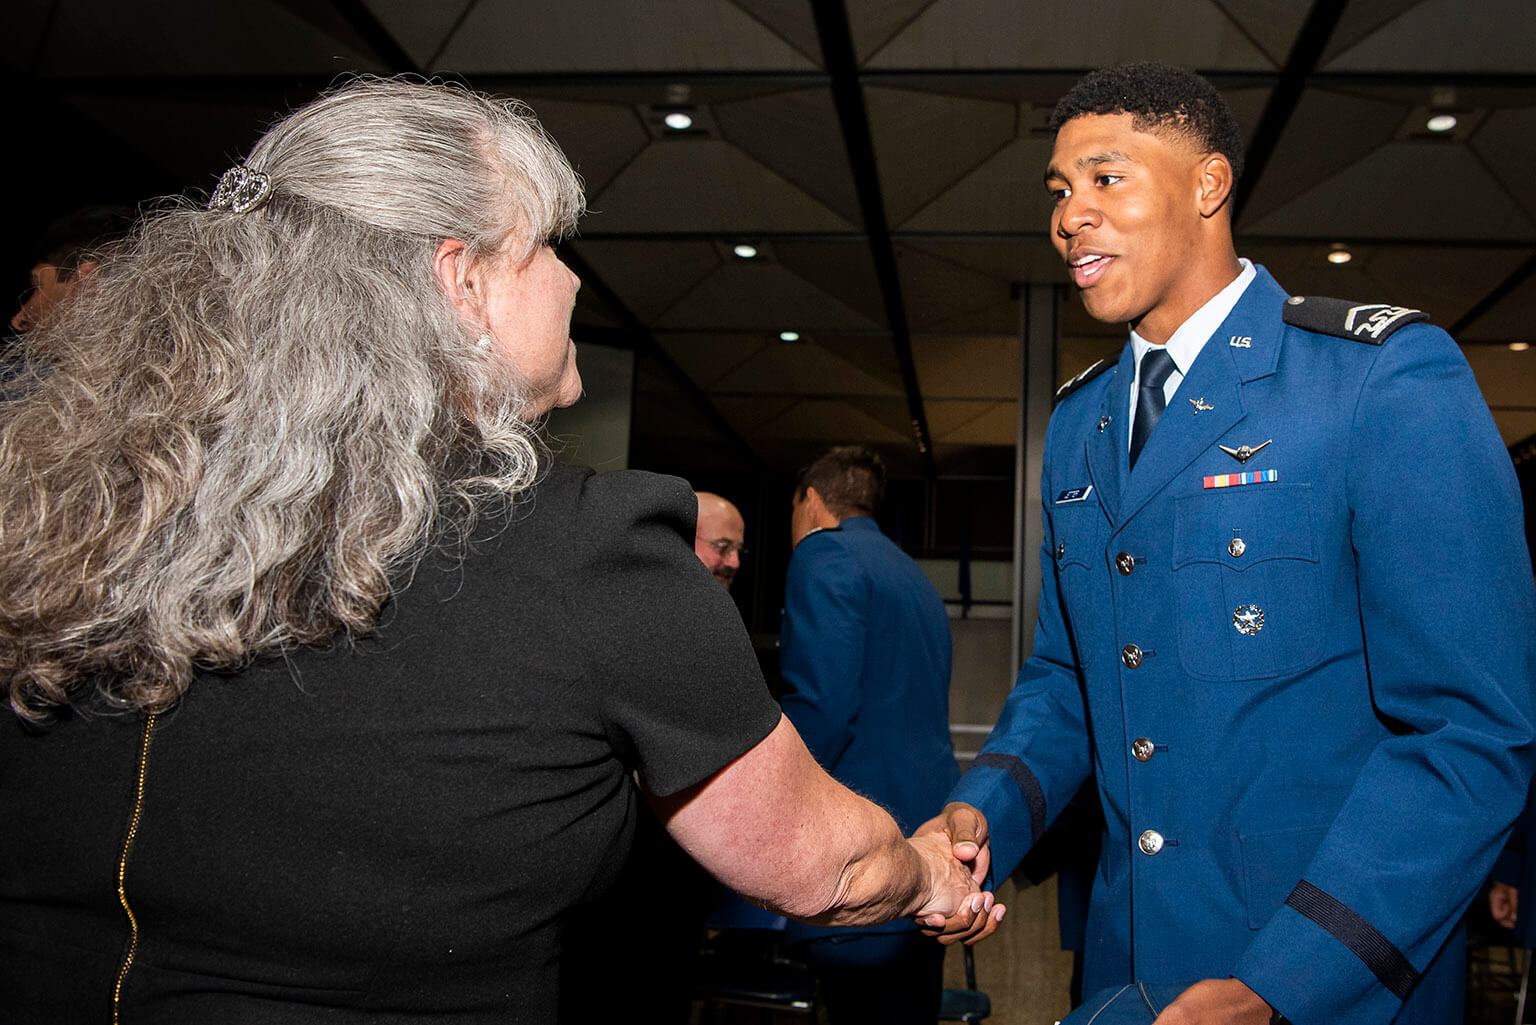 Lori Longfritz greets U.S. Air Force Academy Cadet 3rd Class Christian Jetter 